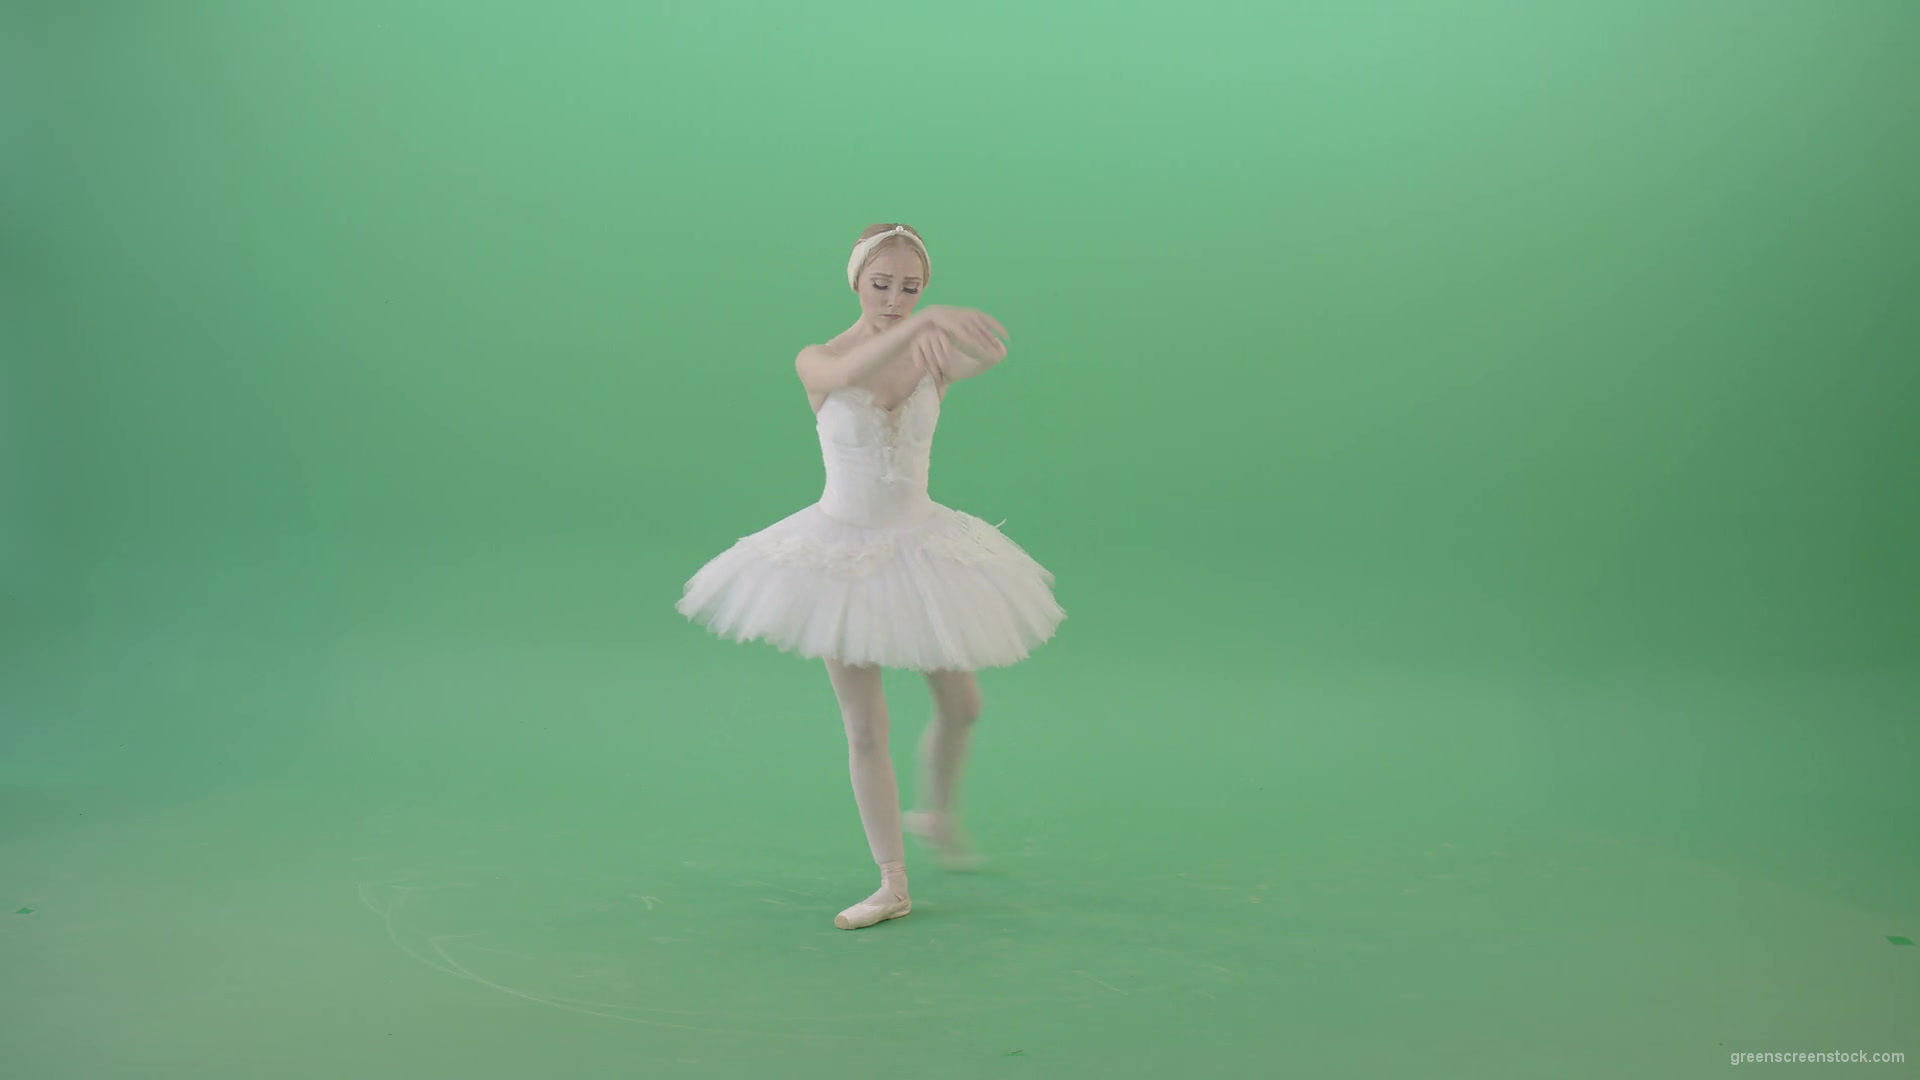 Beautifull-Swan-Lake-Ballerina-waving-hand-wigns-on-green-screen-4K-Video-Footage-1920_007 Green Screen Stock